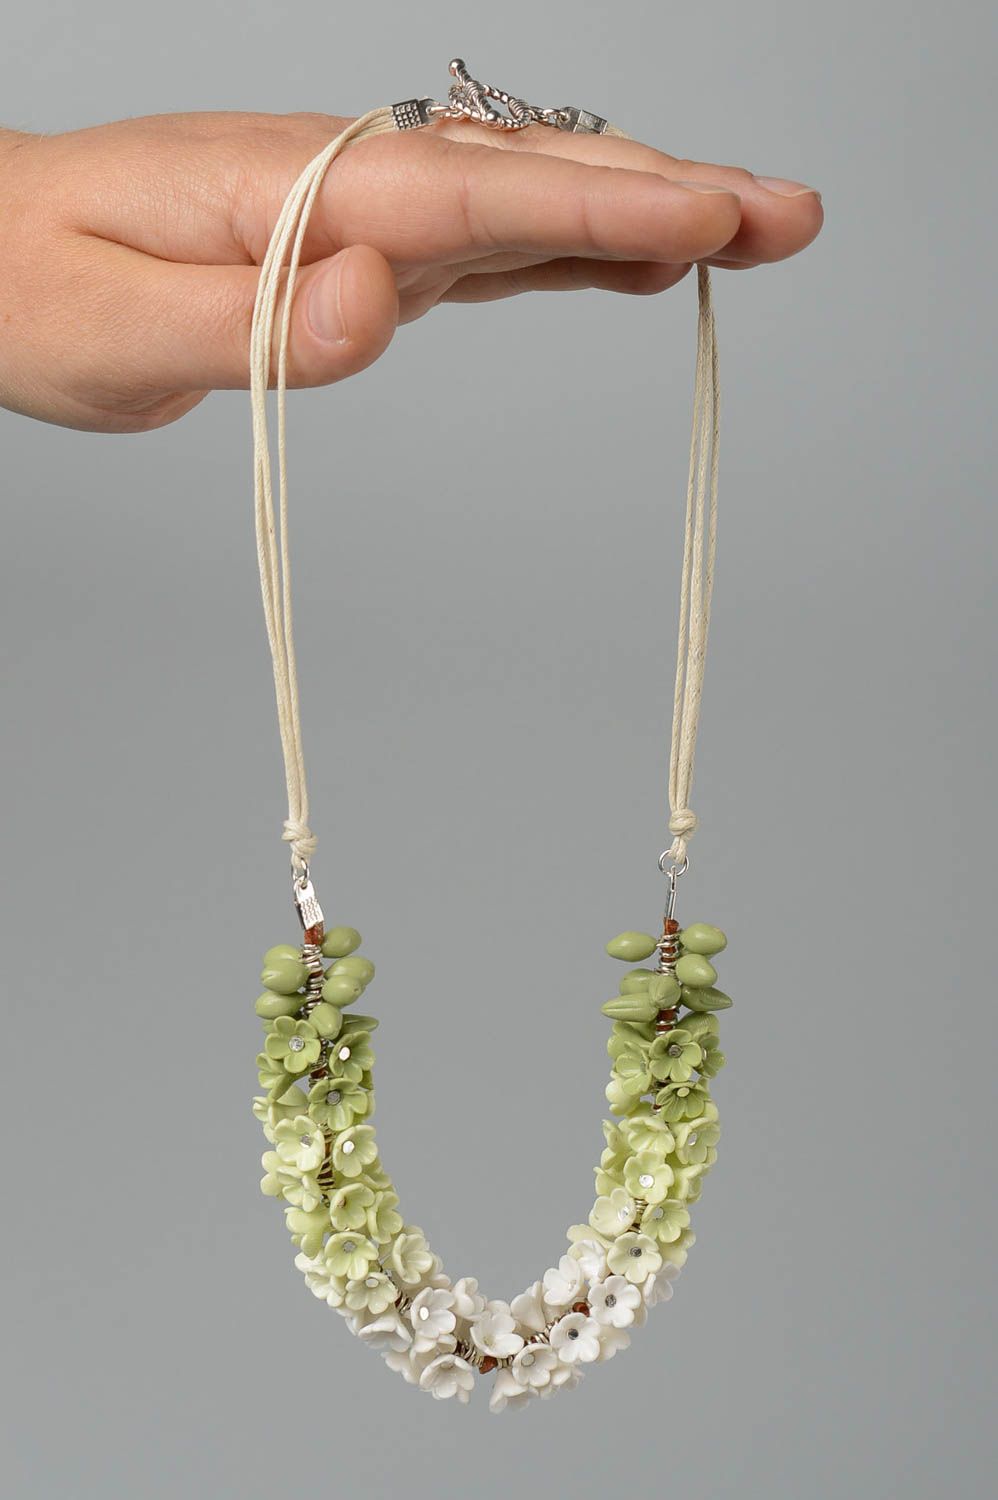 Flower necklace handmade jewelry beaded jewelry for women designer necklace photo 5